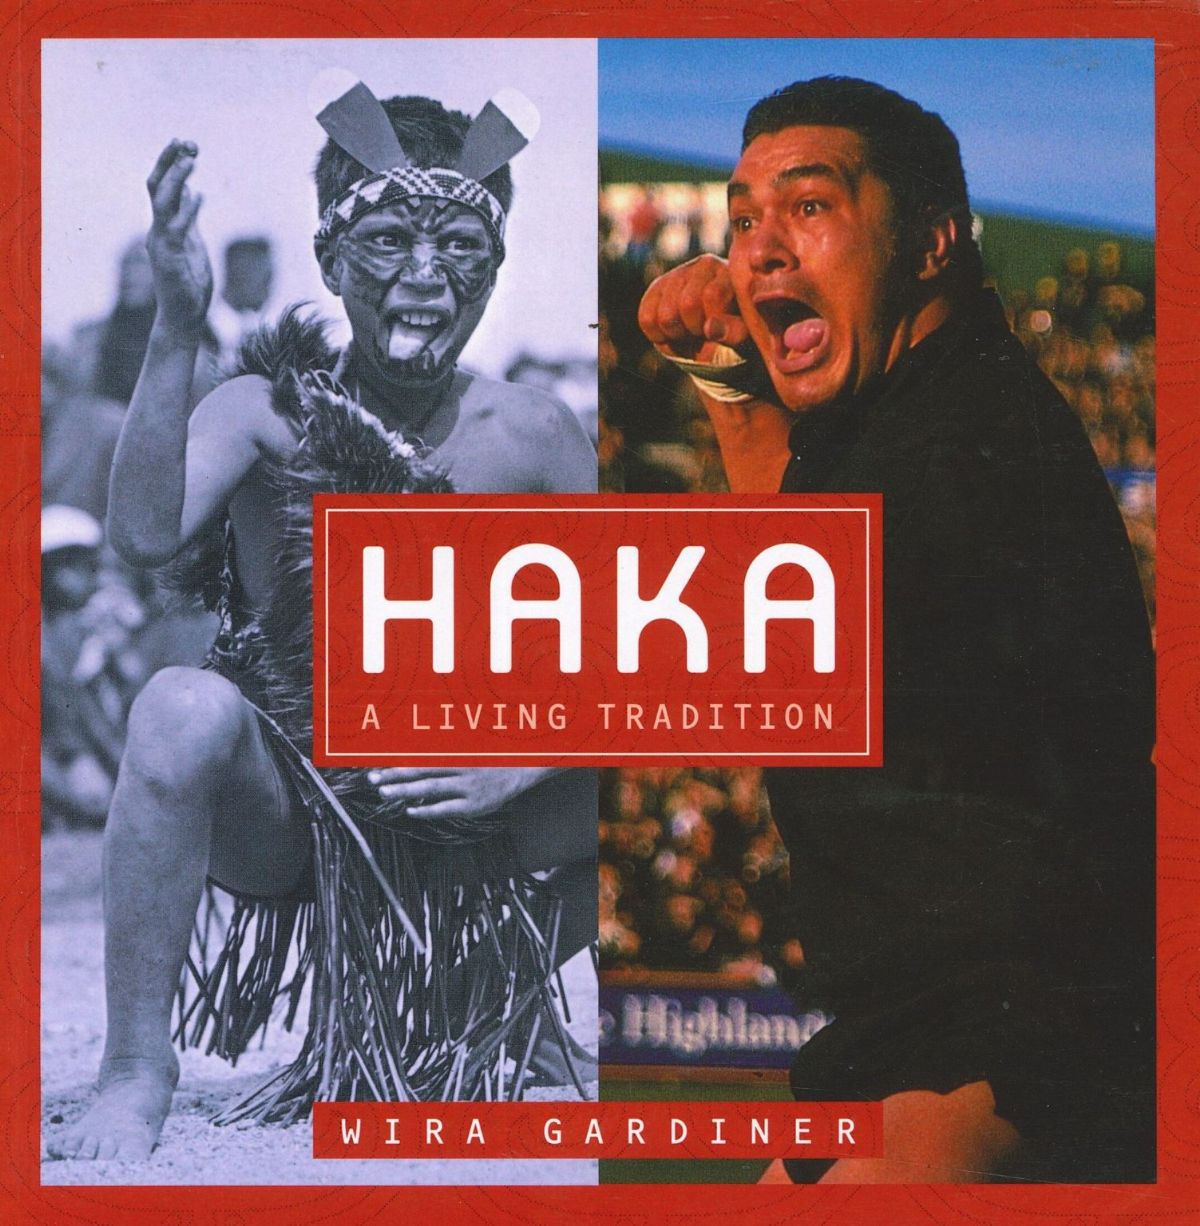 HAKA: A Living Tradition